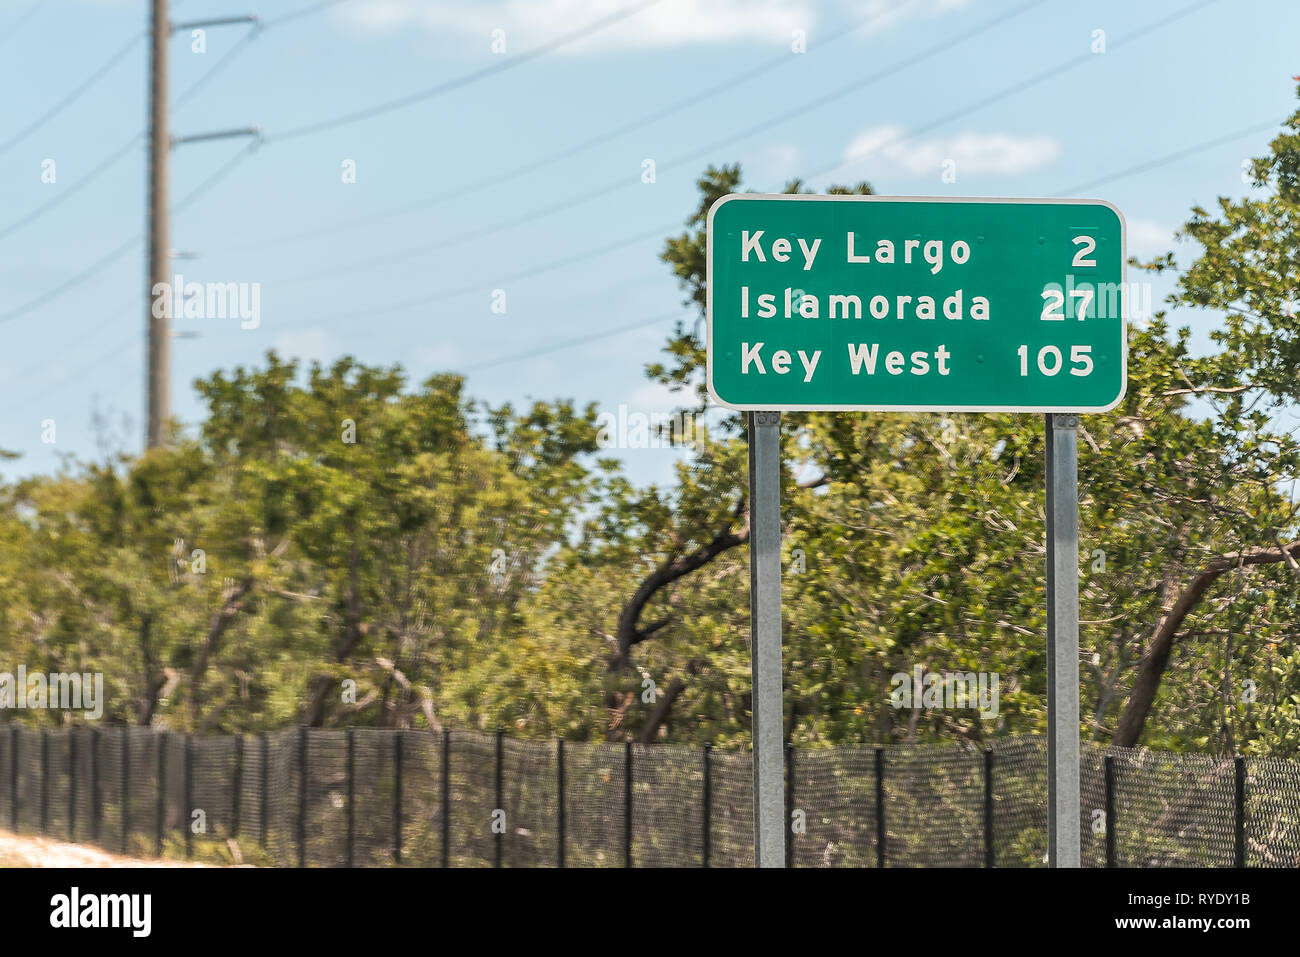 Green road sign for Key Largo, Islamorada and Key west island along Overseas highway in Florida isolated on street Stock Photo